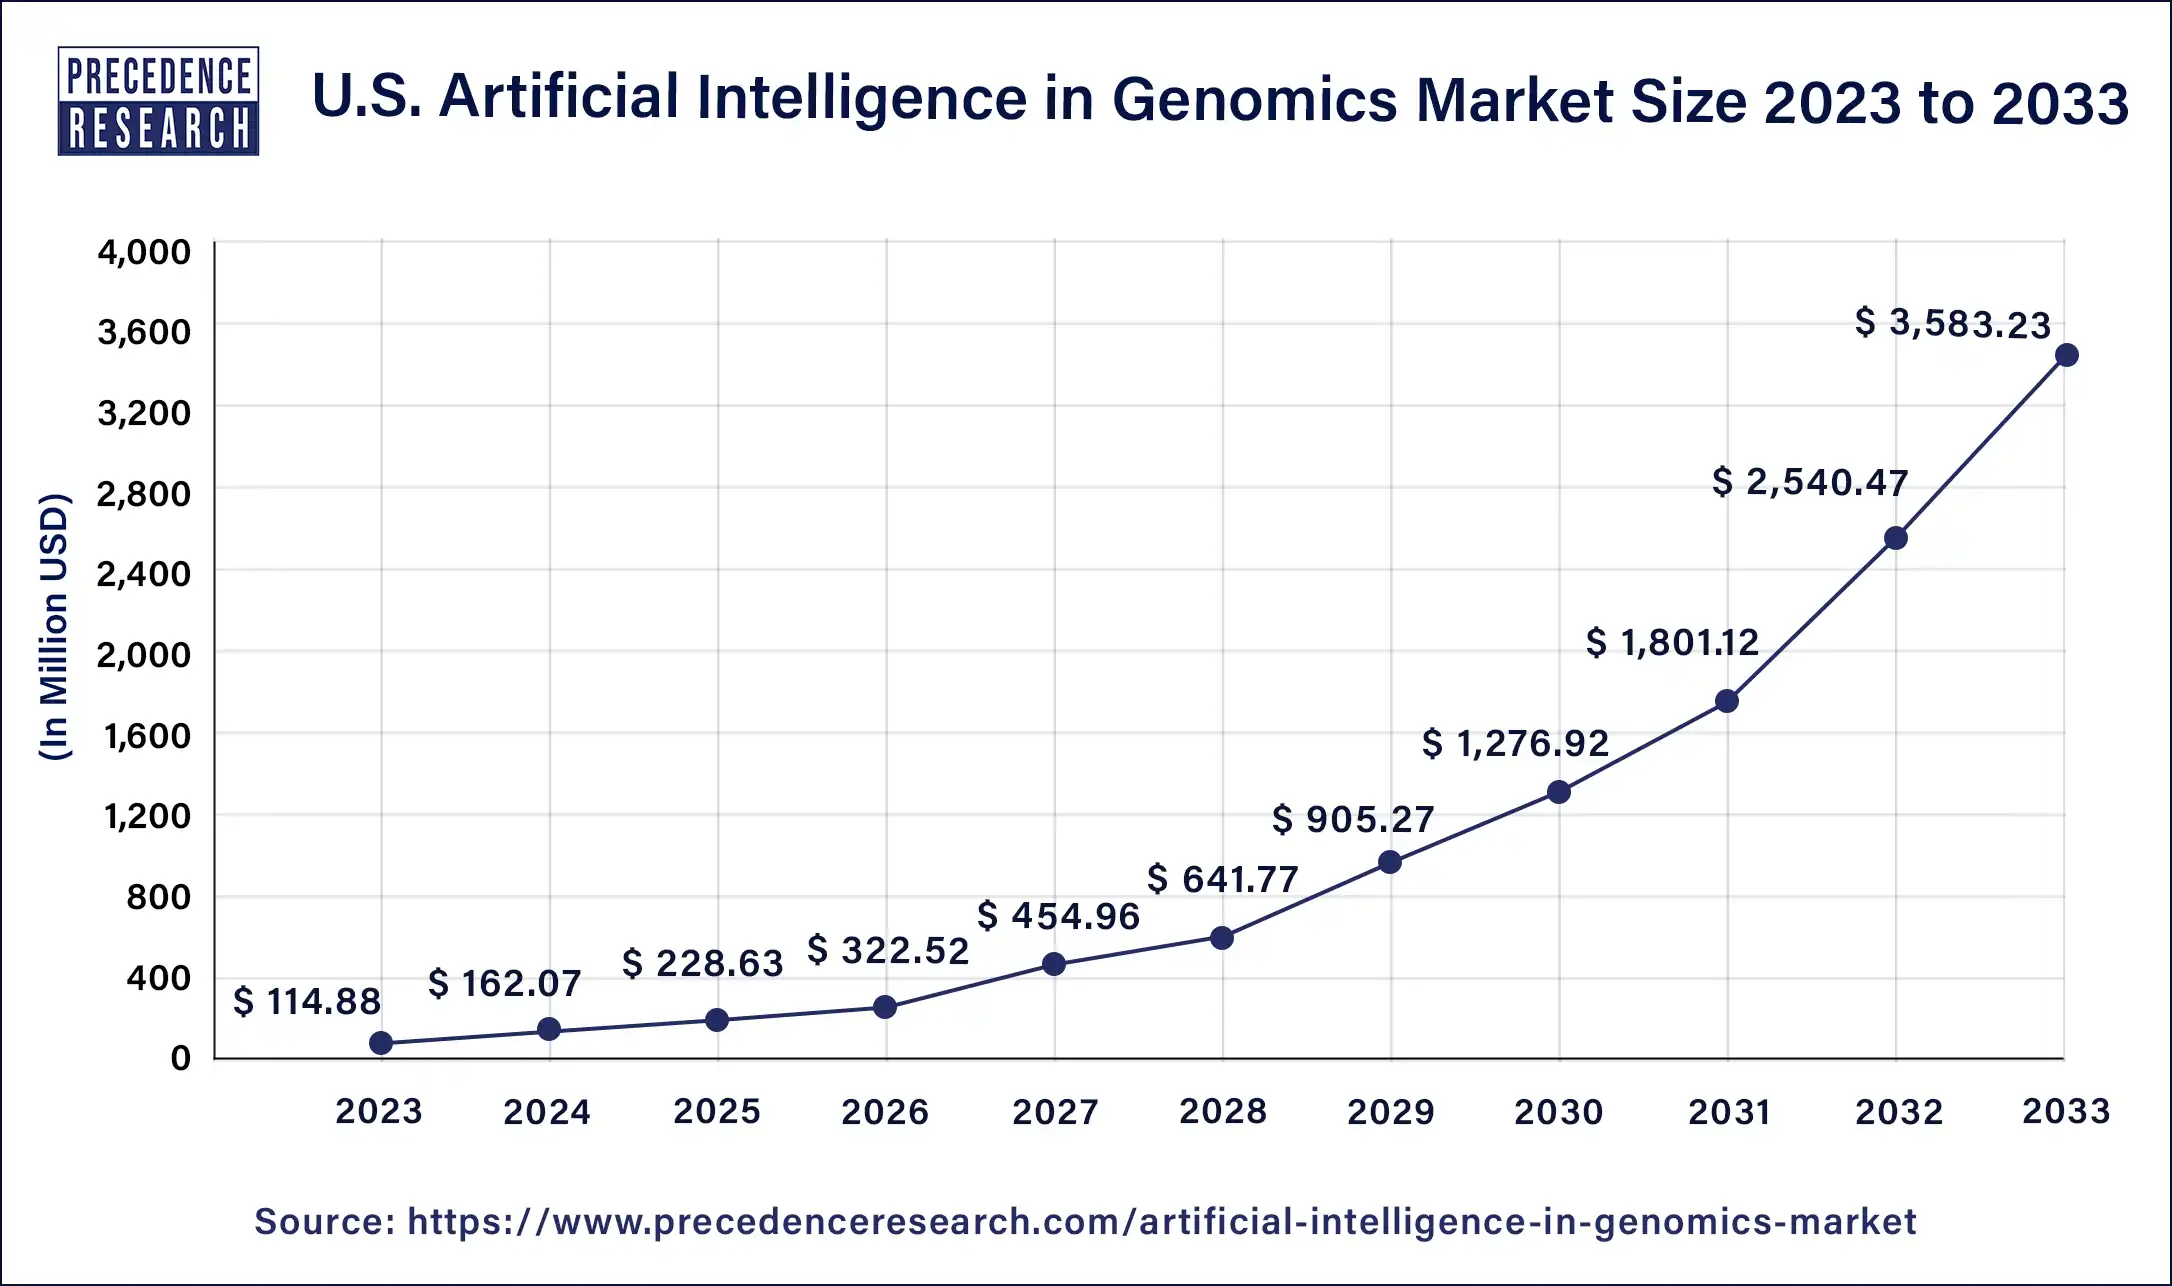 U.S. Artificial Intelligence in Genomics Market Size 2024 to 2033